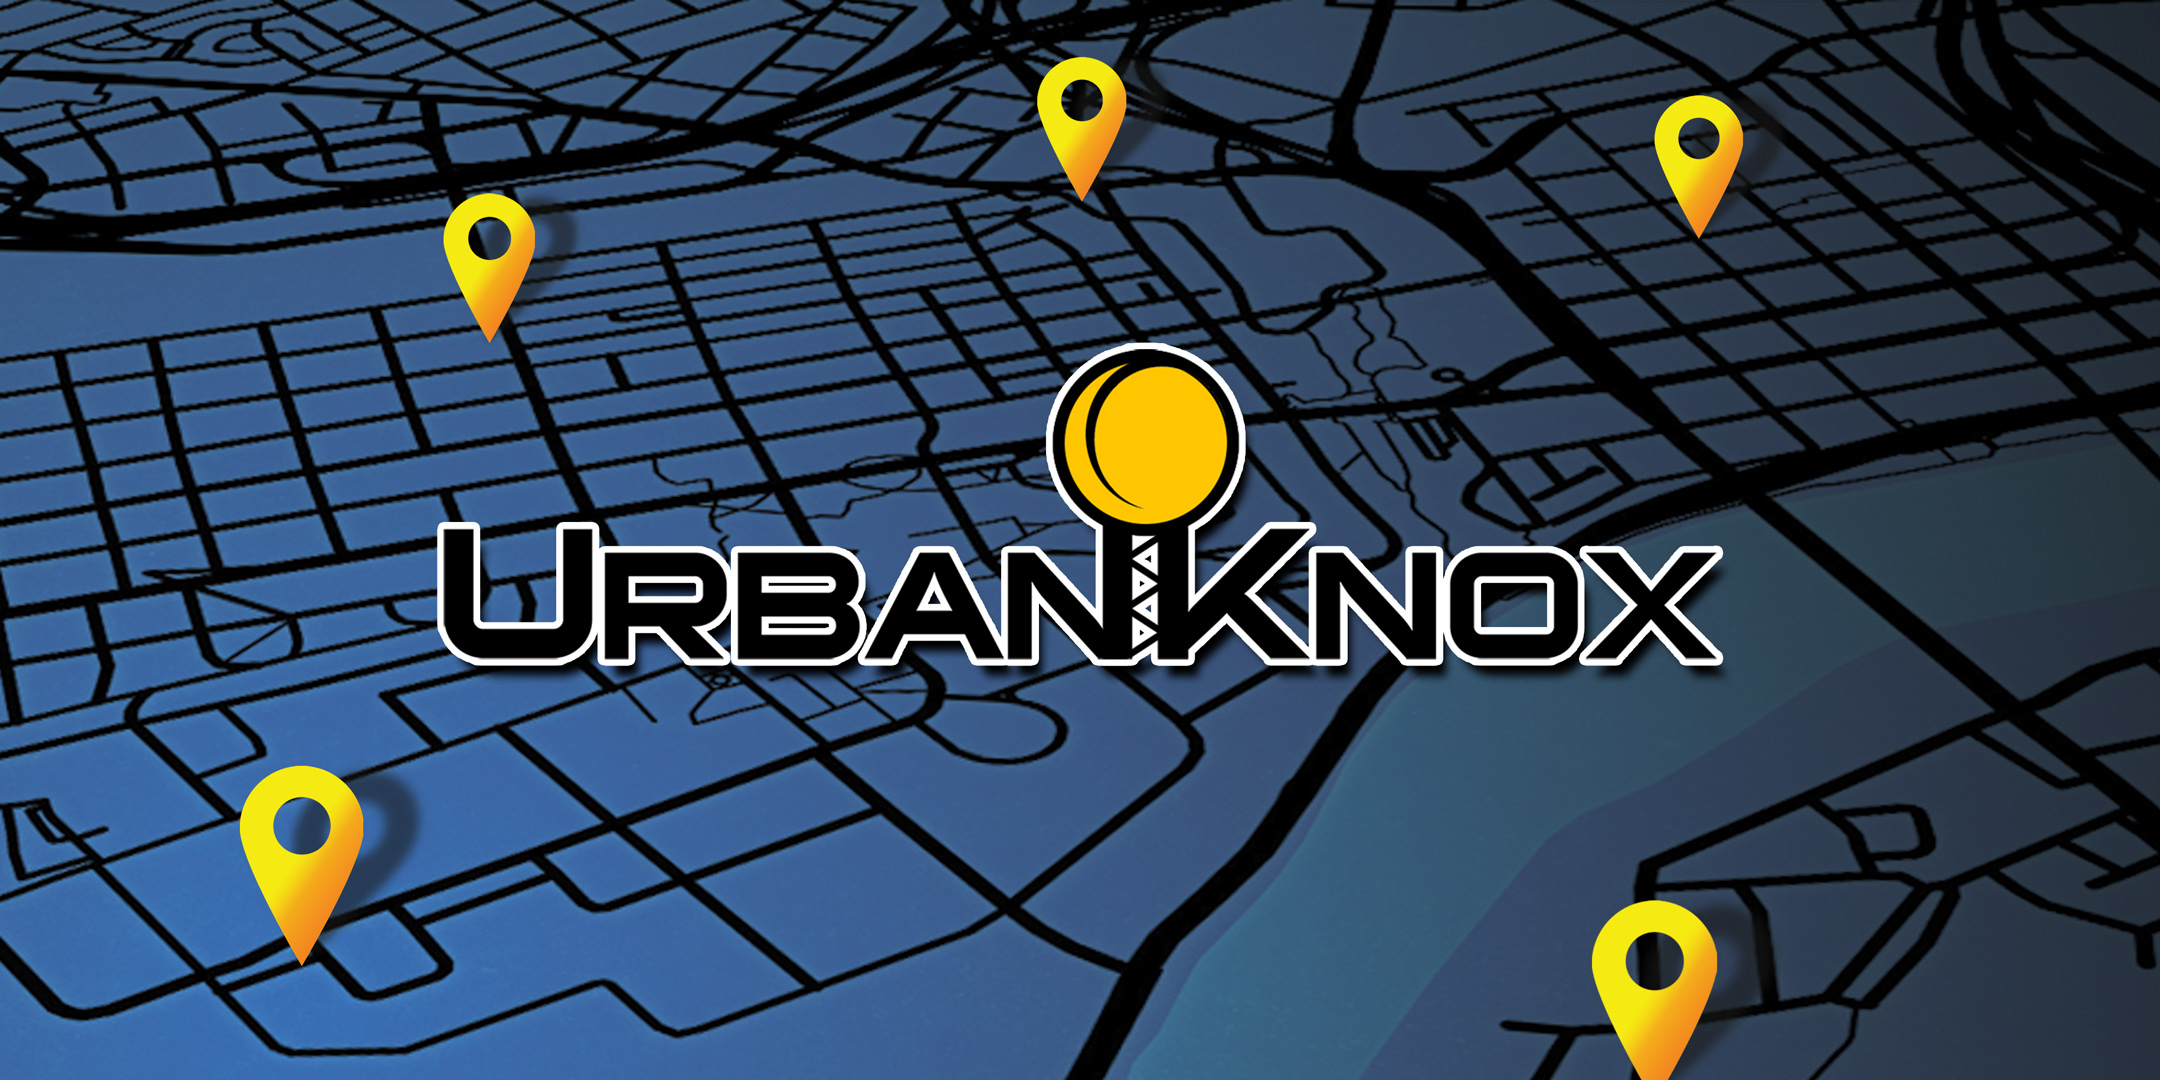 urbanknox-featured-brian-brooks-full